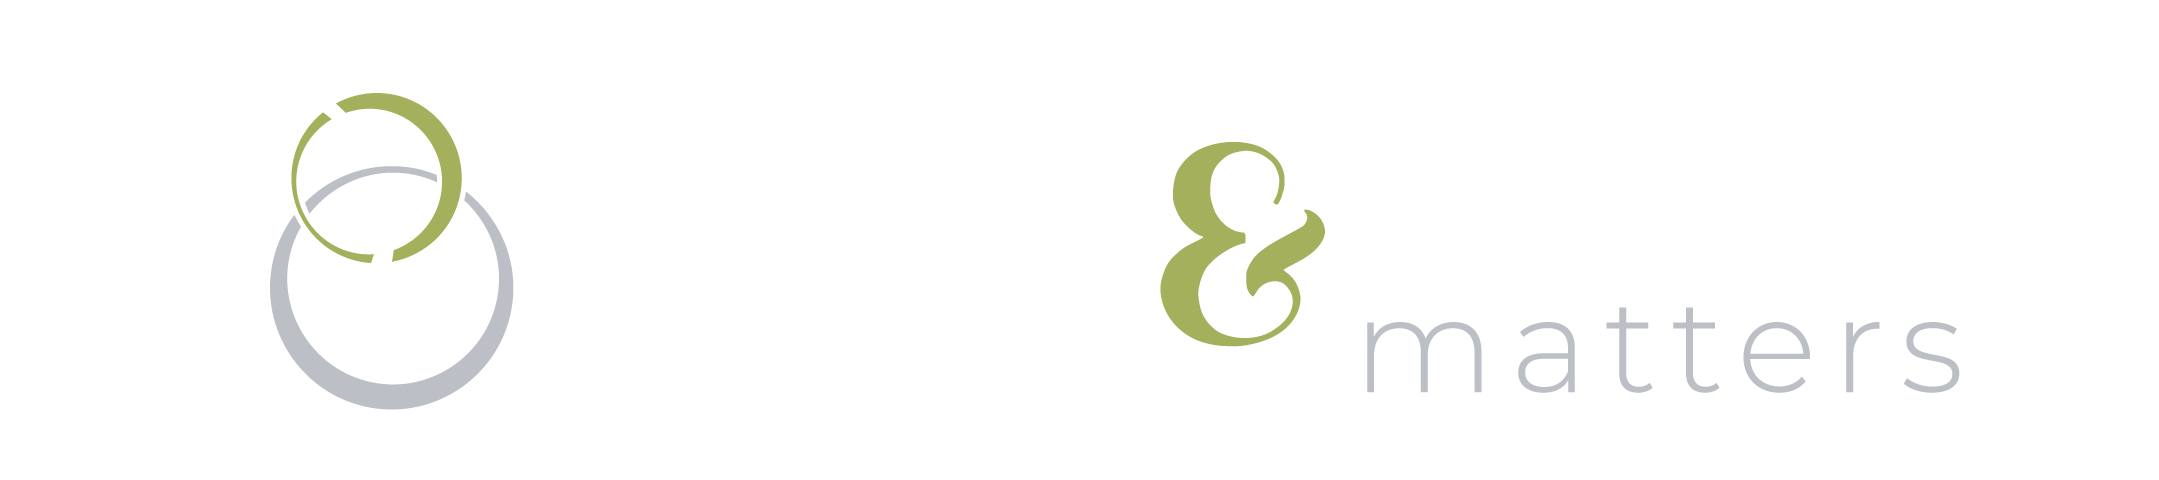 Child & Family Matters Logo